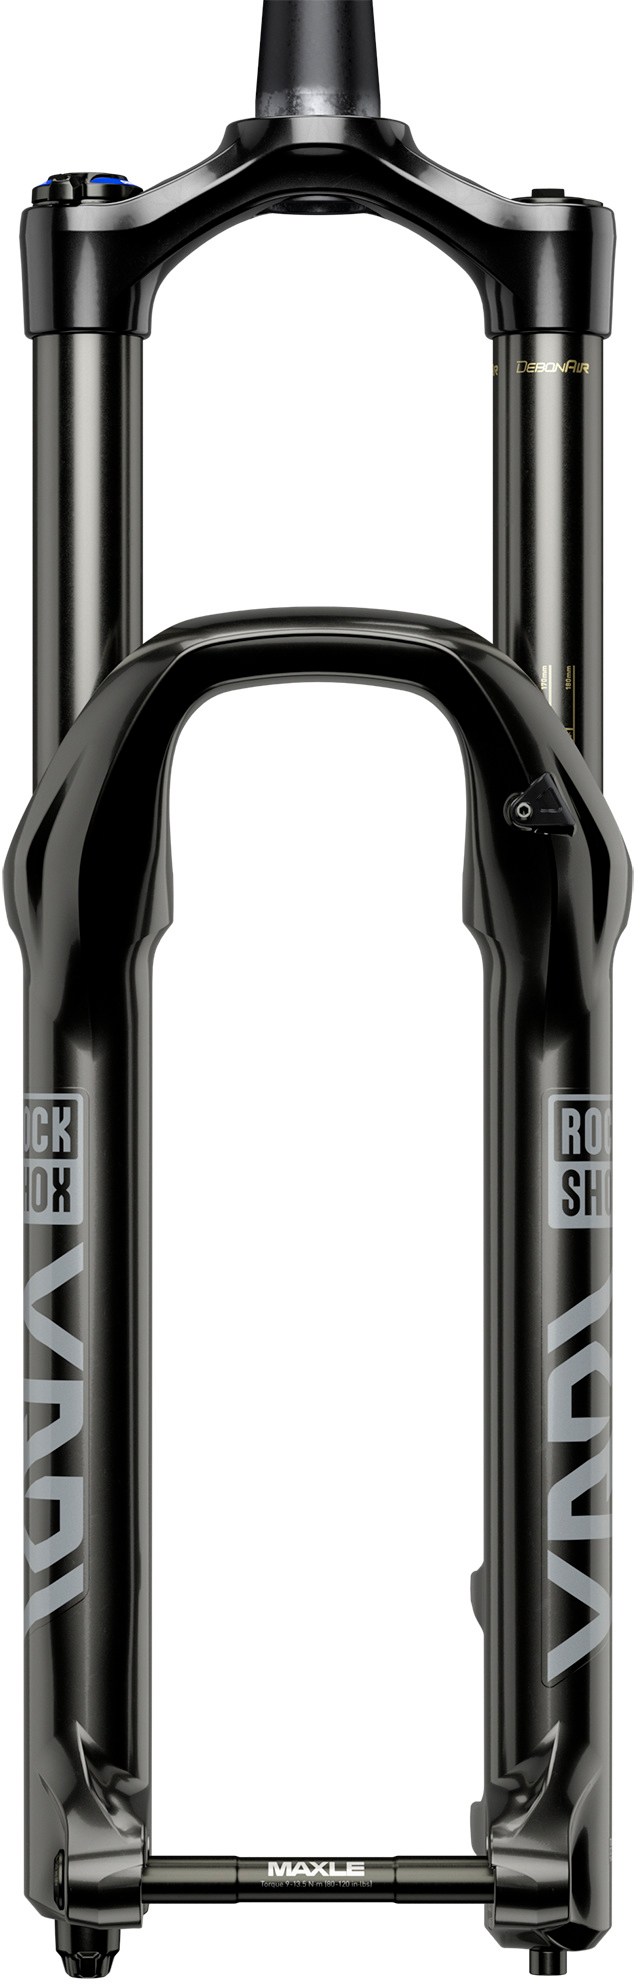 Амортизационная вилка Yari RC RockShox, черный rockshox xc28 наклейки серо зеленый глянцевый для велосипеда на вилку mtb stickers